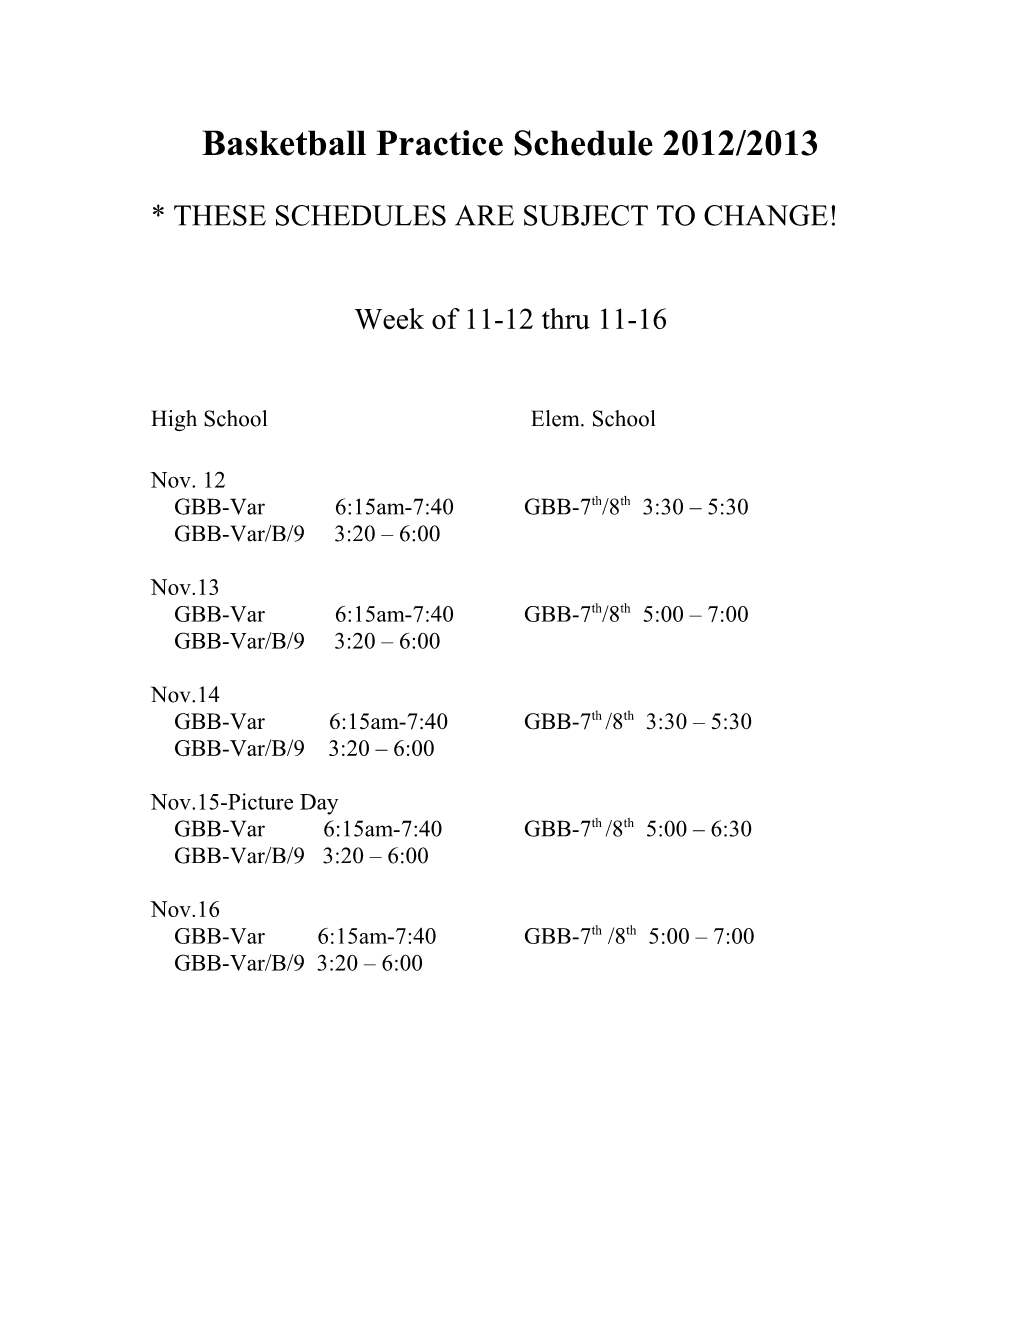 Basketball Practice Schedule 2012-13